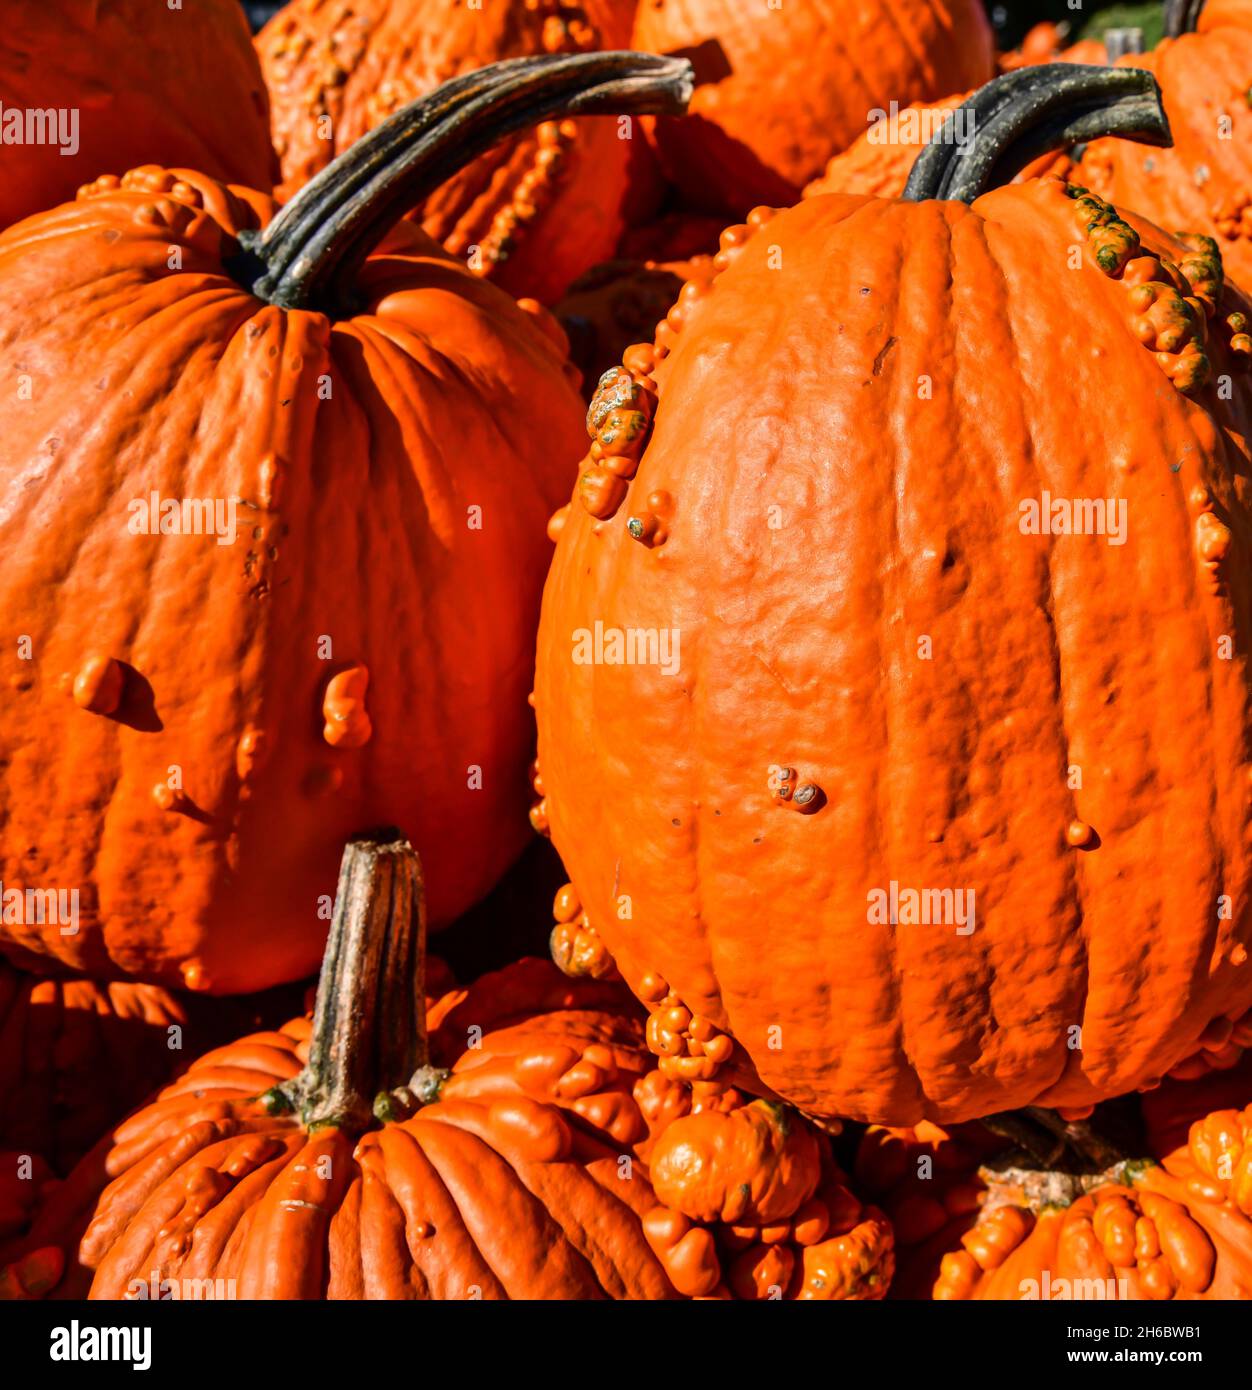 Big orange pumpkins at the pumpkin farm Stock Photo